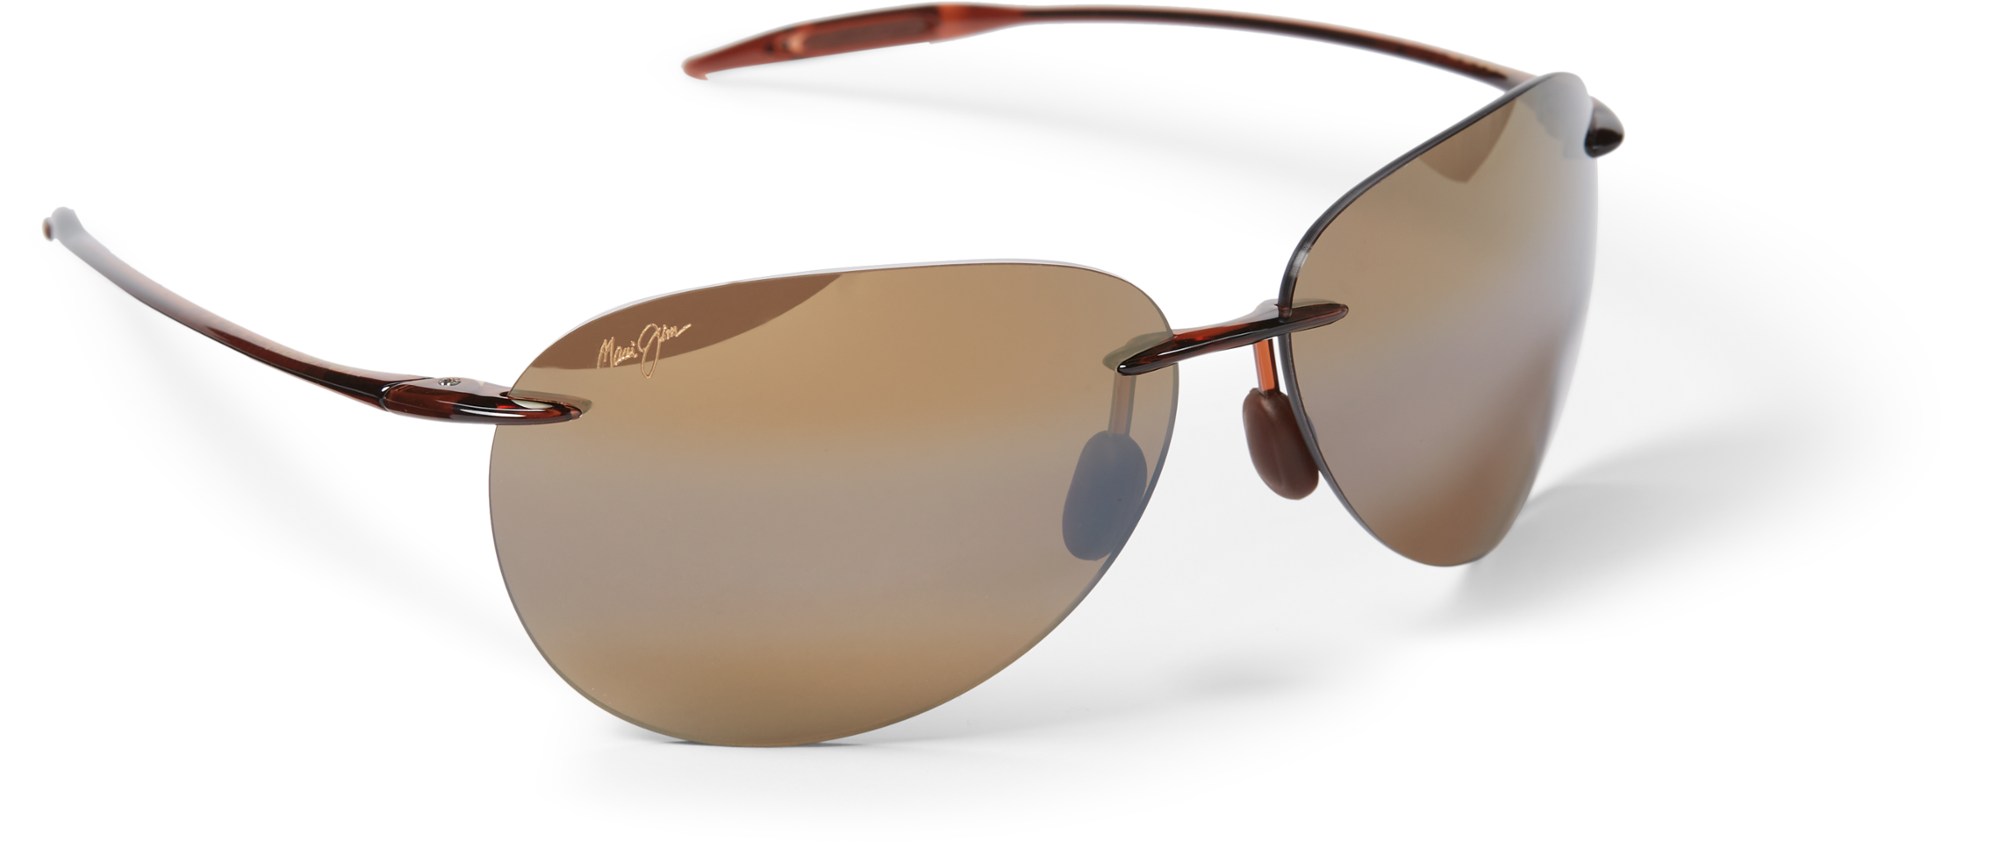 Поляризованные солнцезащитные очки Sugar Beach Maui Jim, коричневый солнцезащитные очки kanaio coast maui jim цвет matte soft black white blue